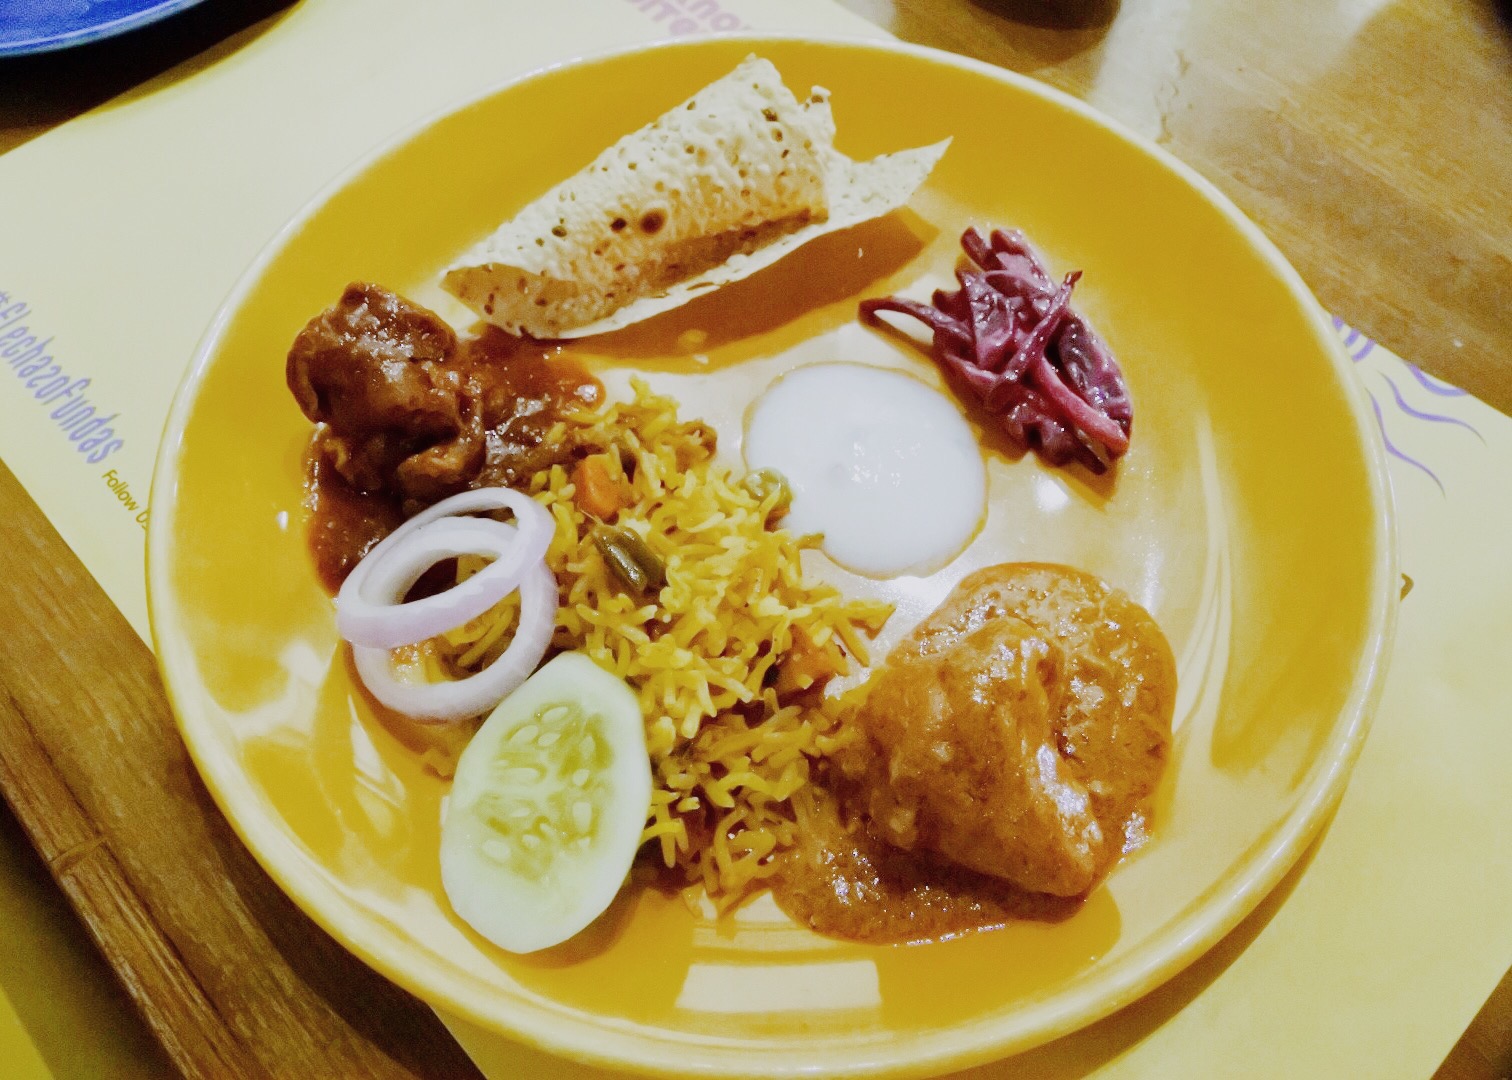 The main course- biryani, chicken, and pappad